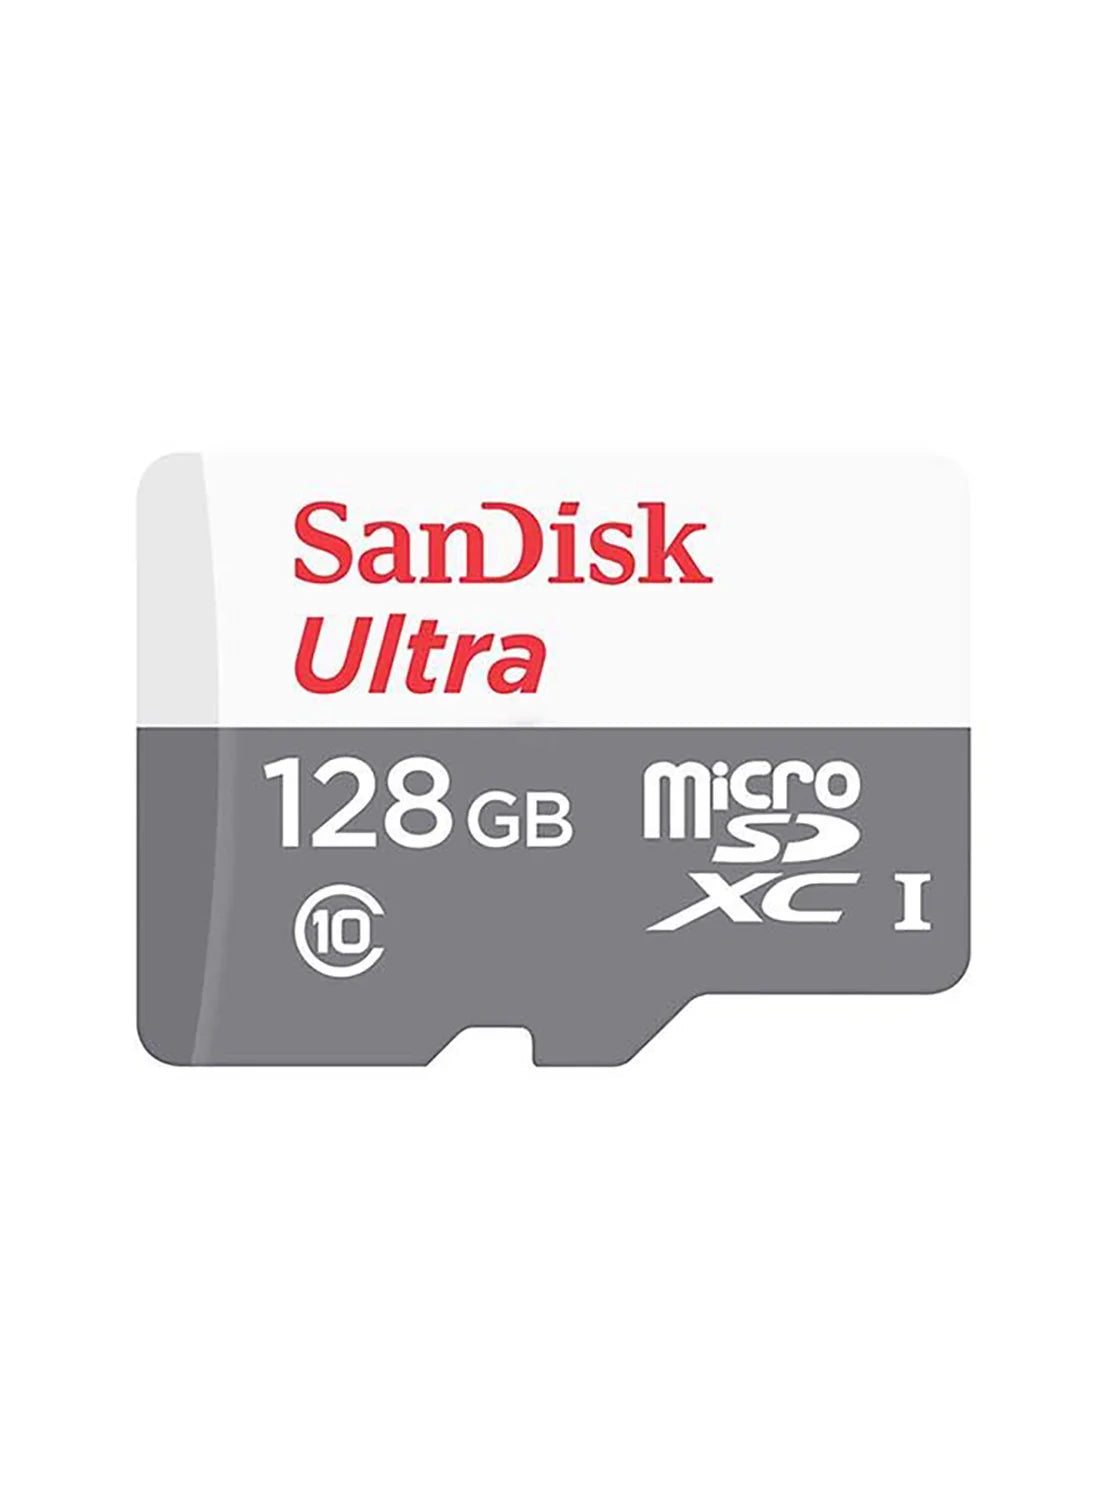 SanDisk Ultra UHS-I MicroSDHC Card 128 GB